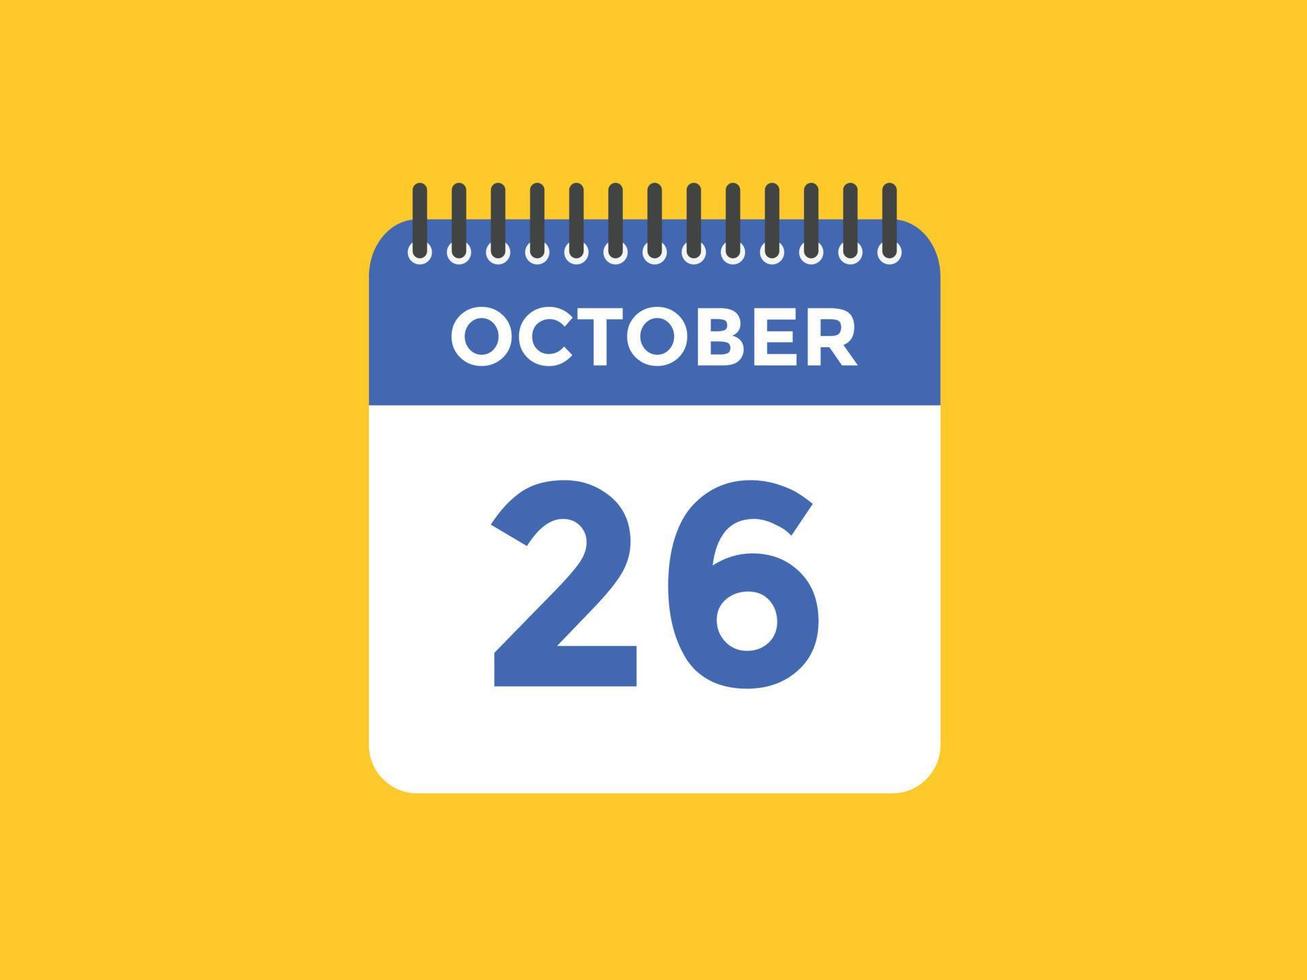 oktober 26 kalender påminnelse. 26: e oktober dagligen kalender ikon mall. kalender 26: e oktober ikon design mall. vektor illustration